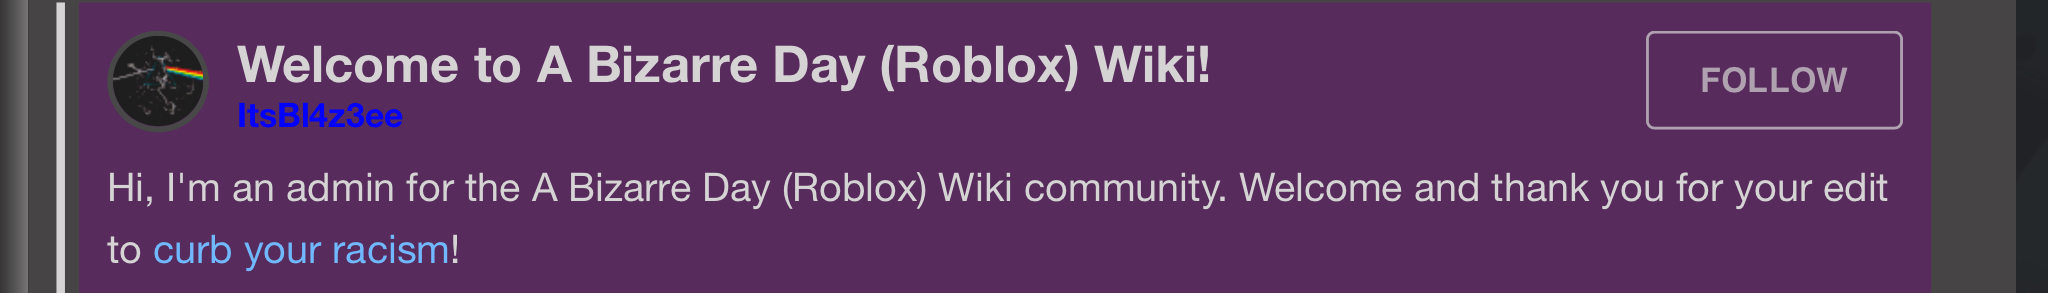 I Dunno Roblox - roblox buff simulator codes october 2020 pro game guides